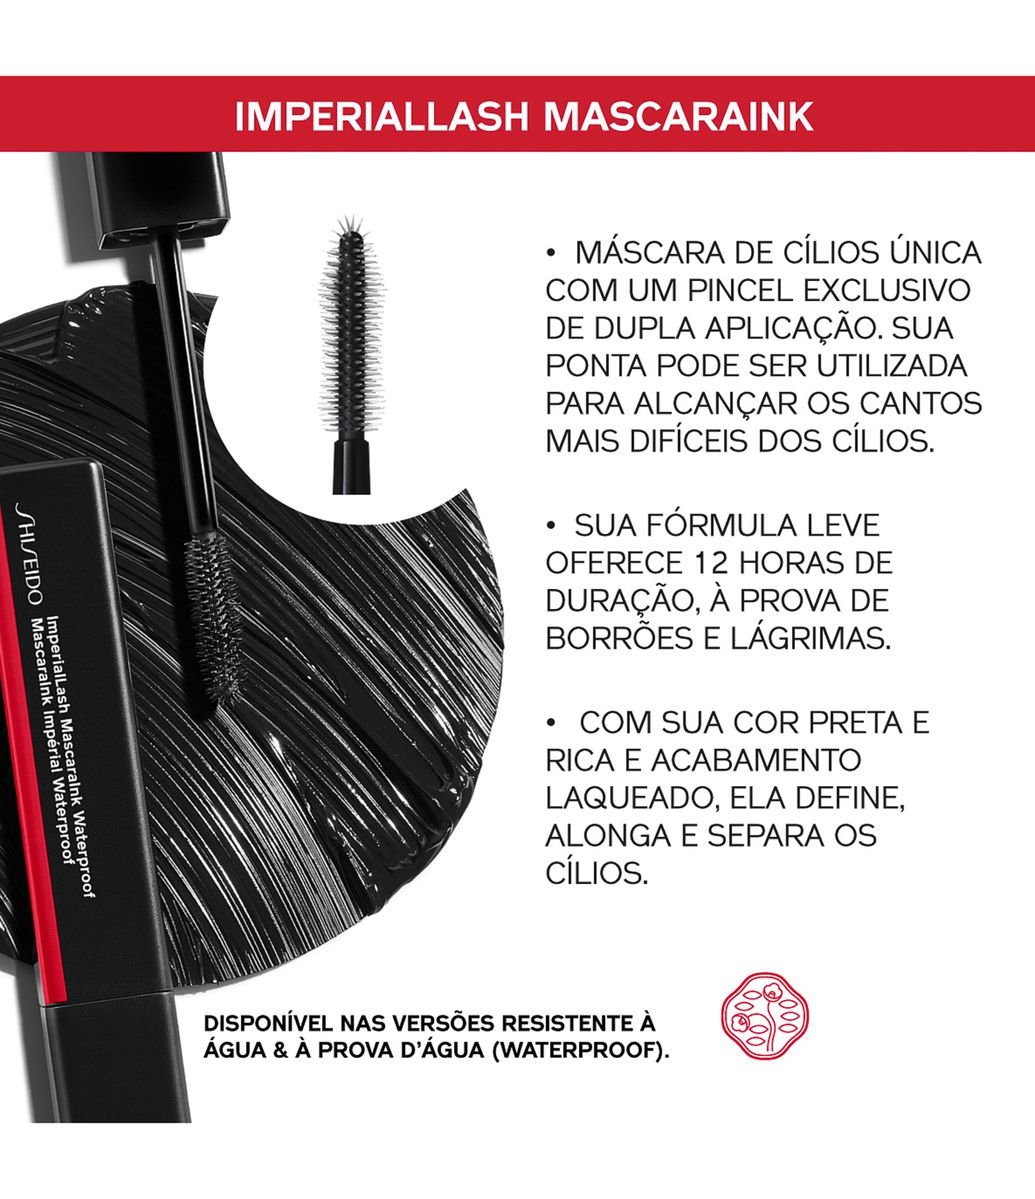 Prova Black Imperiallash Shiseido 01 D\'água A De Máscara Cílios Mascaraink